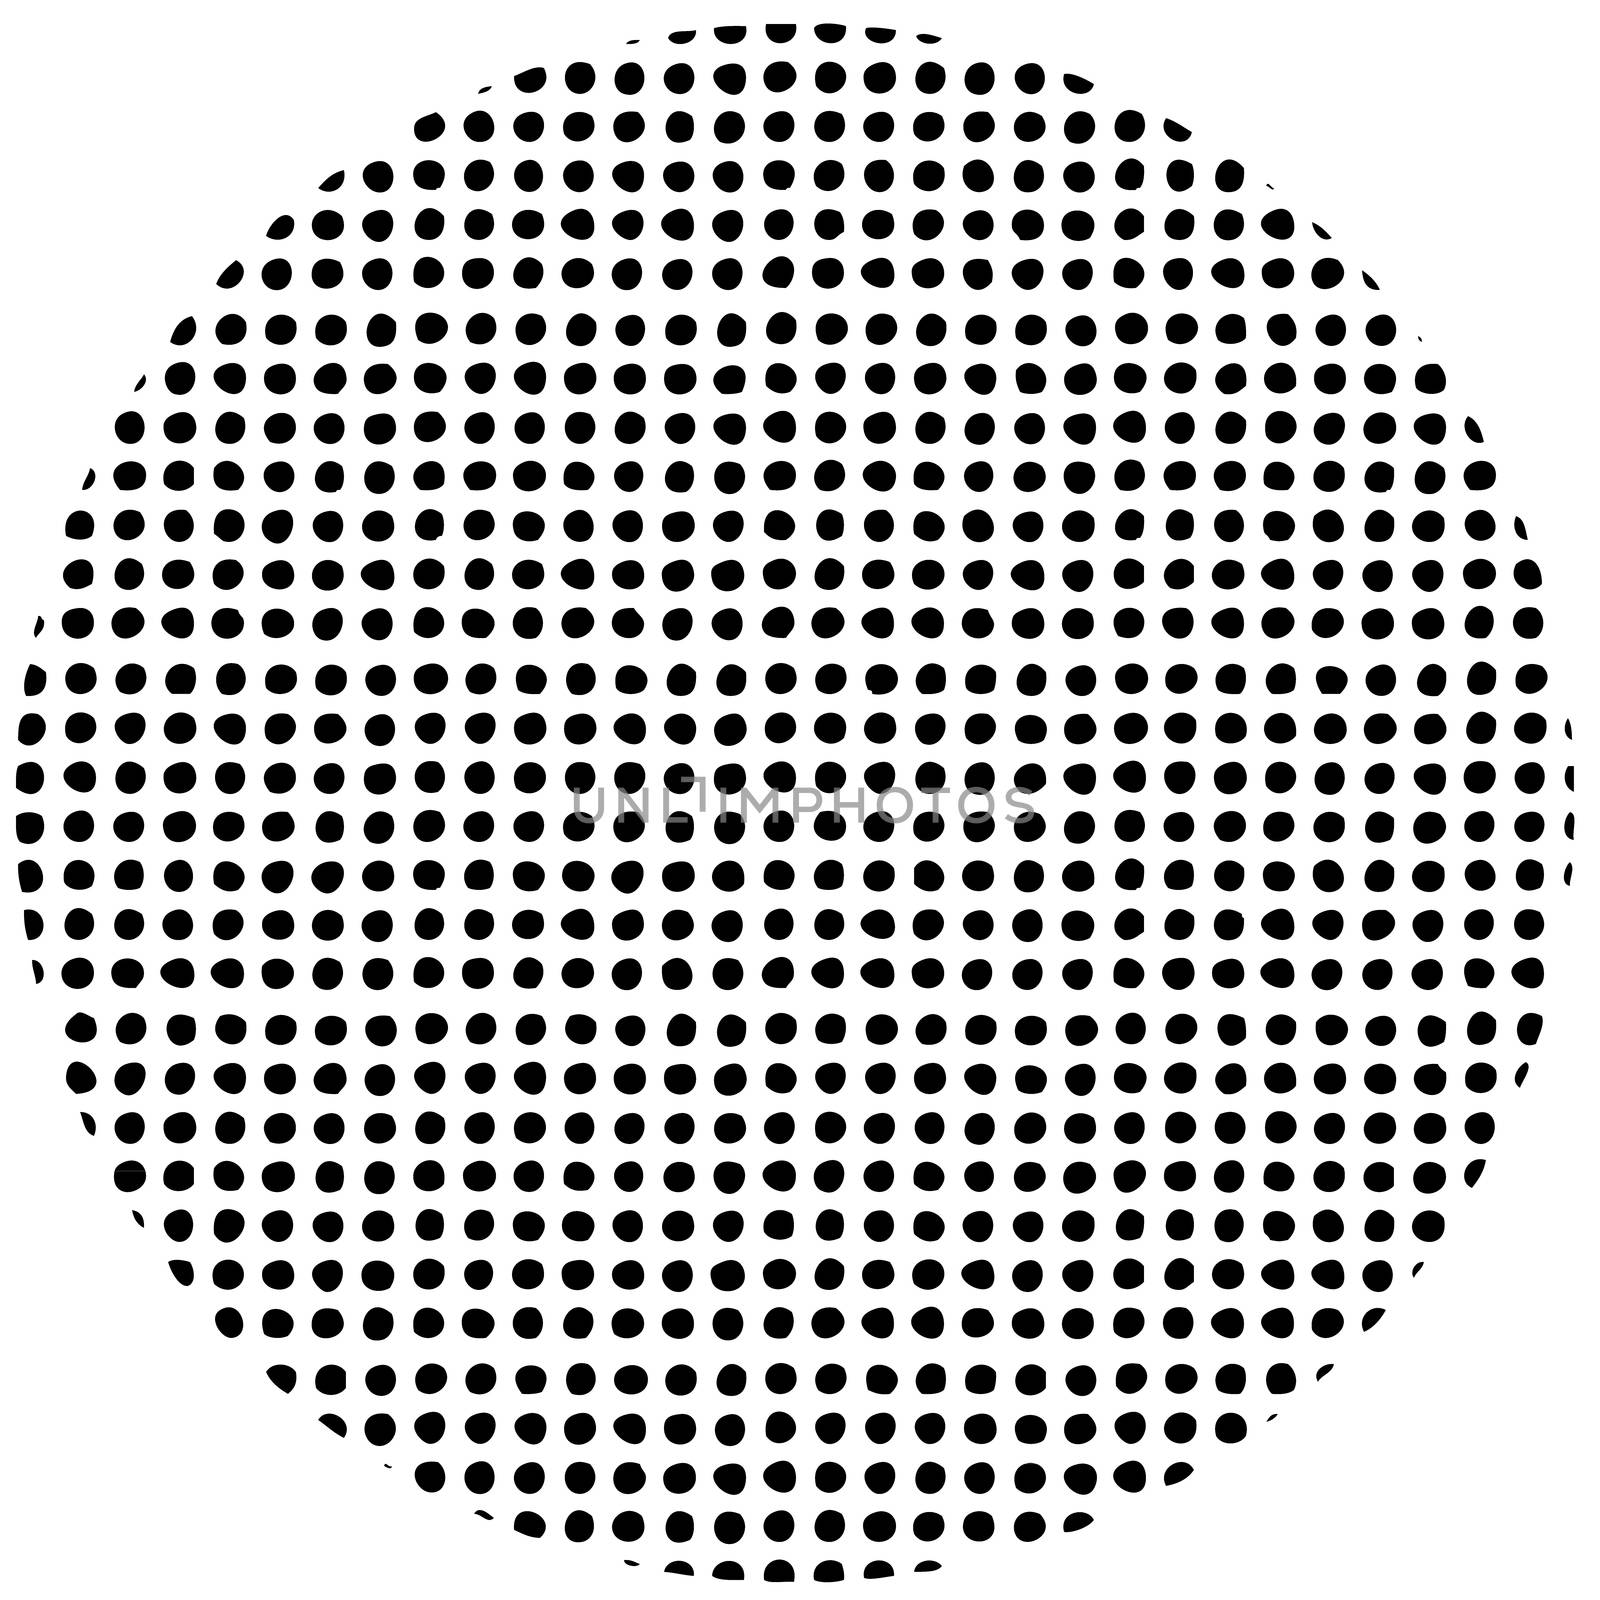 circle shaped, black dot on white background hand drawn pattern